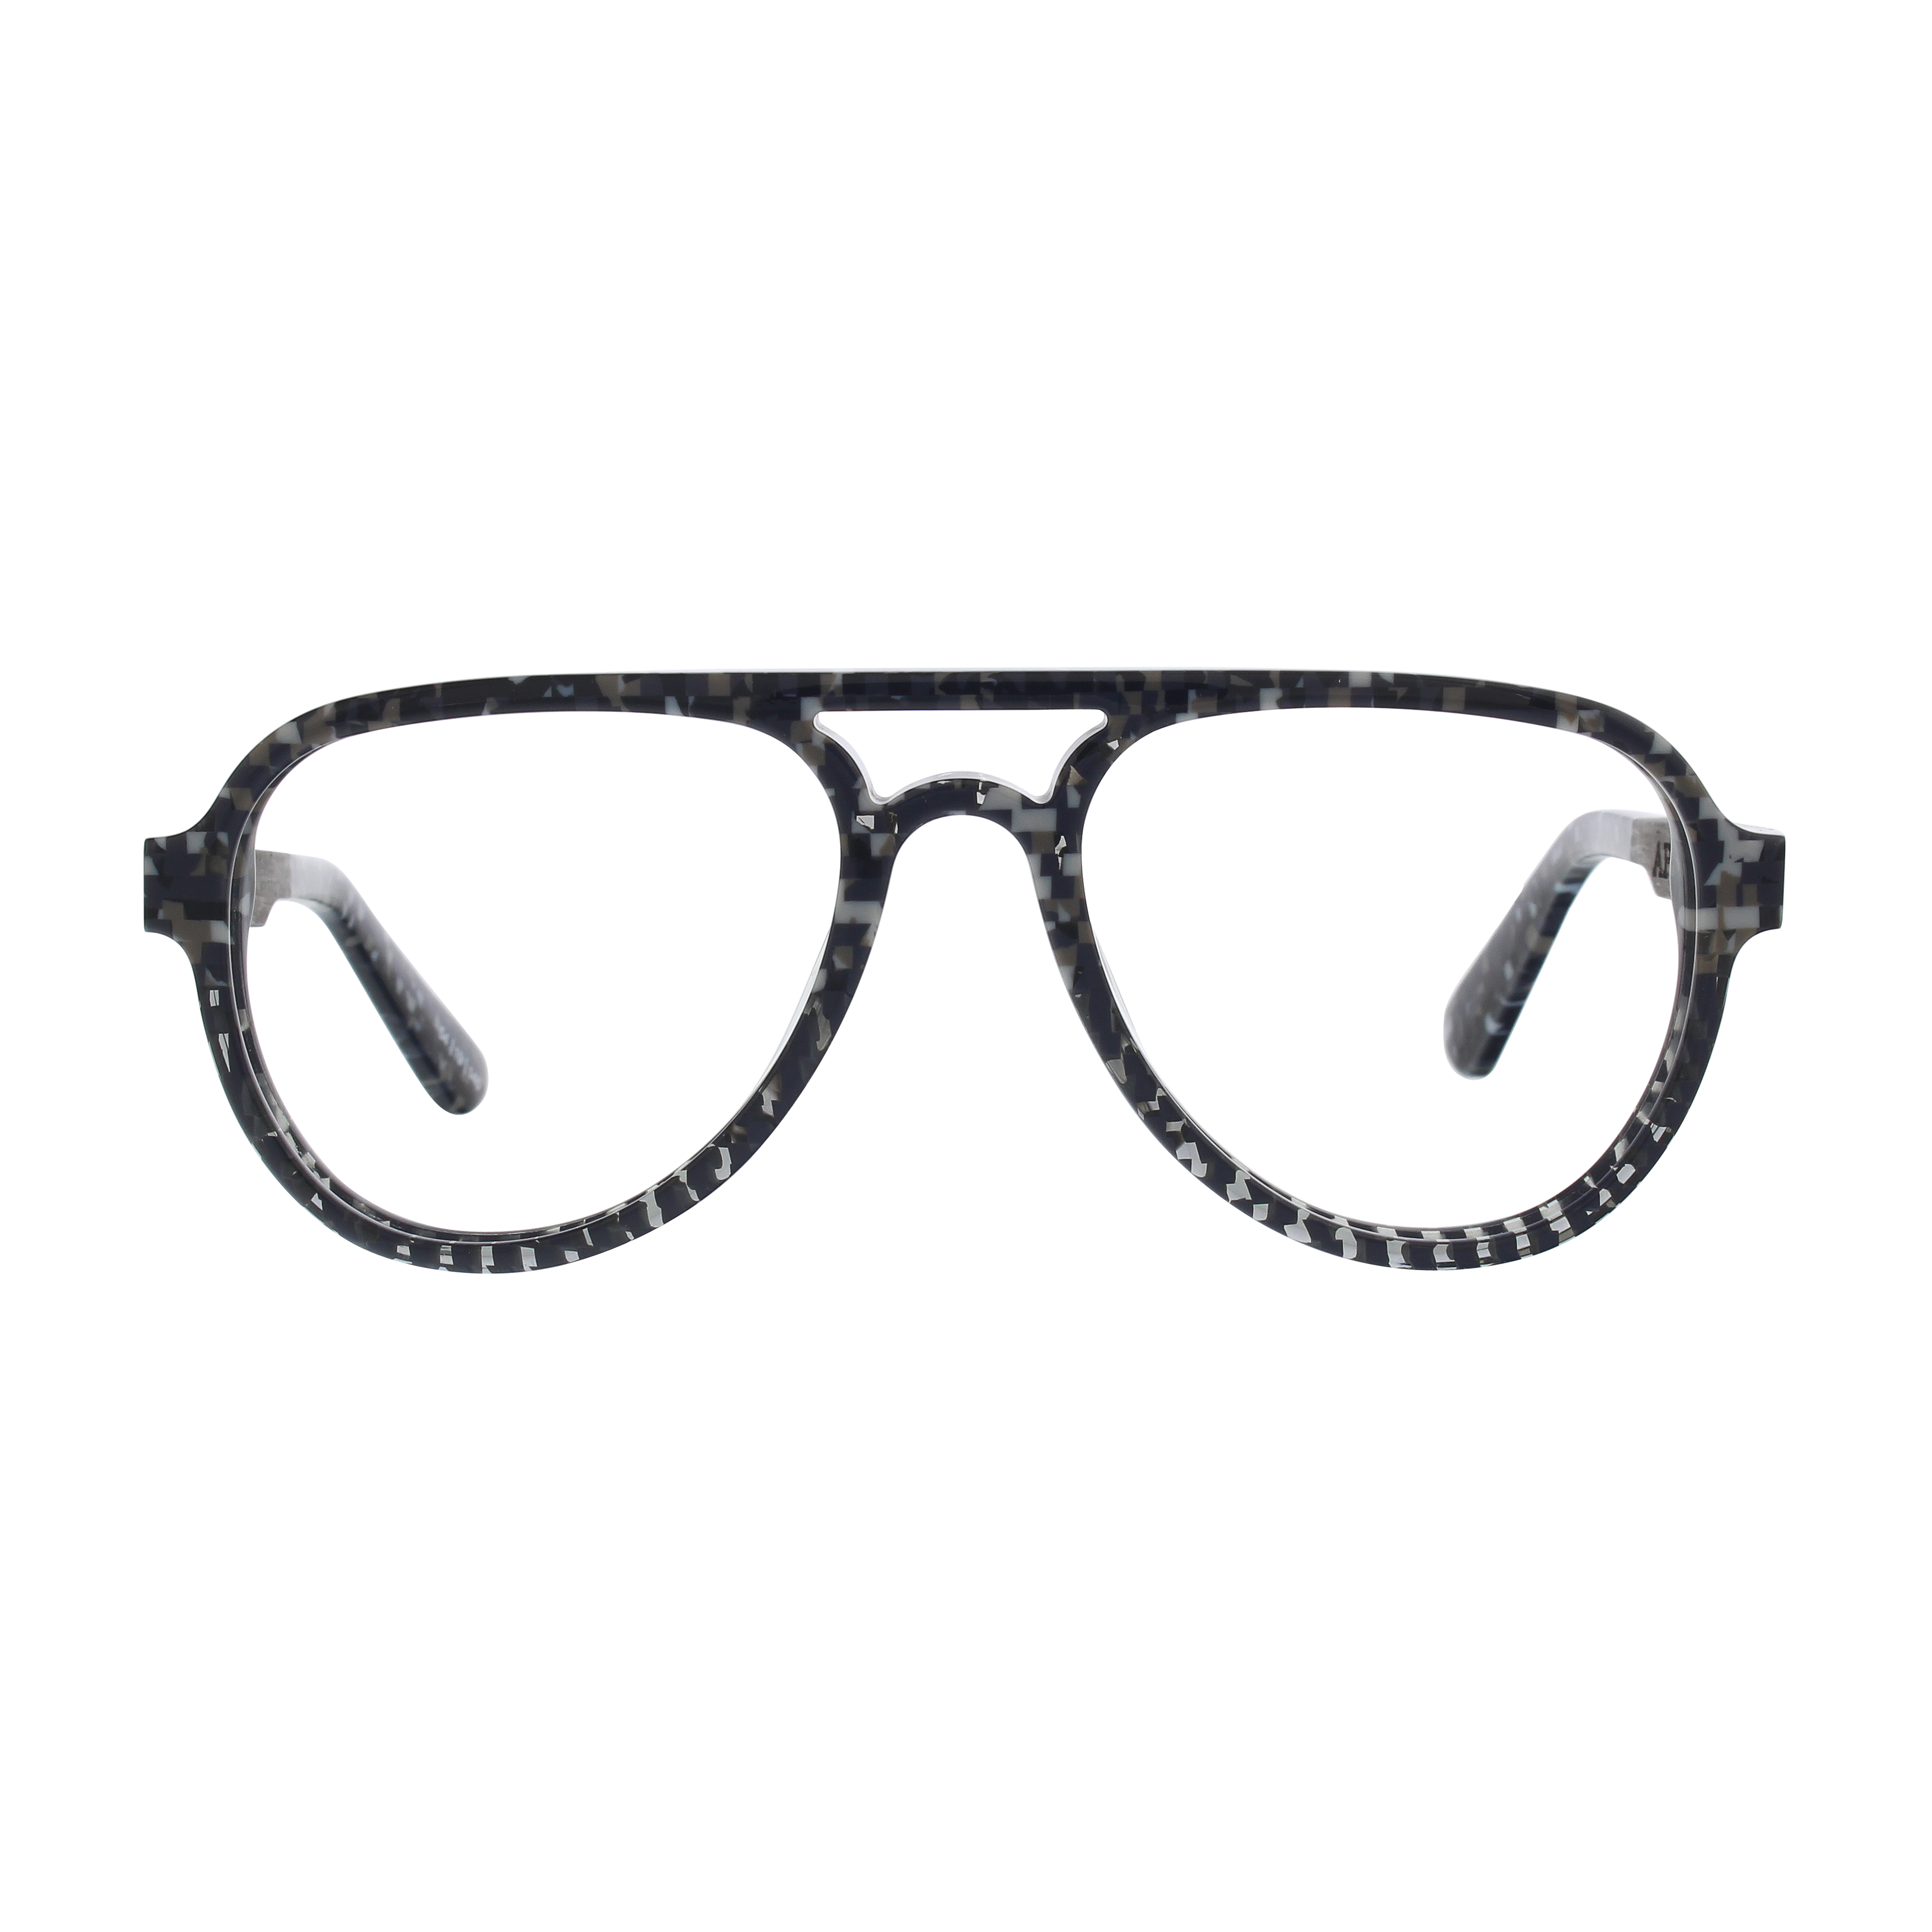 APACHE BLUGARD 8-Bit - Blue Light Glasses - Johnny Fly Eyewear 